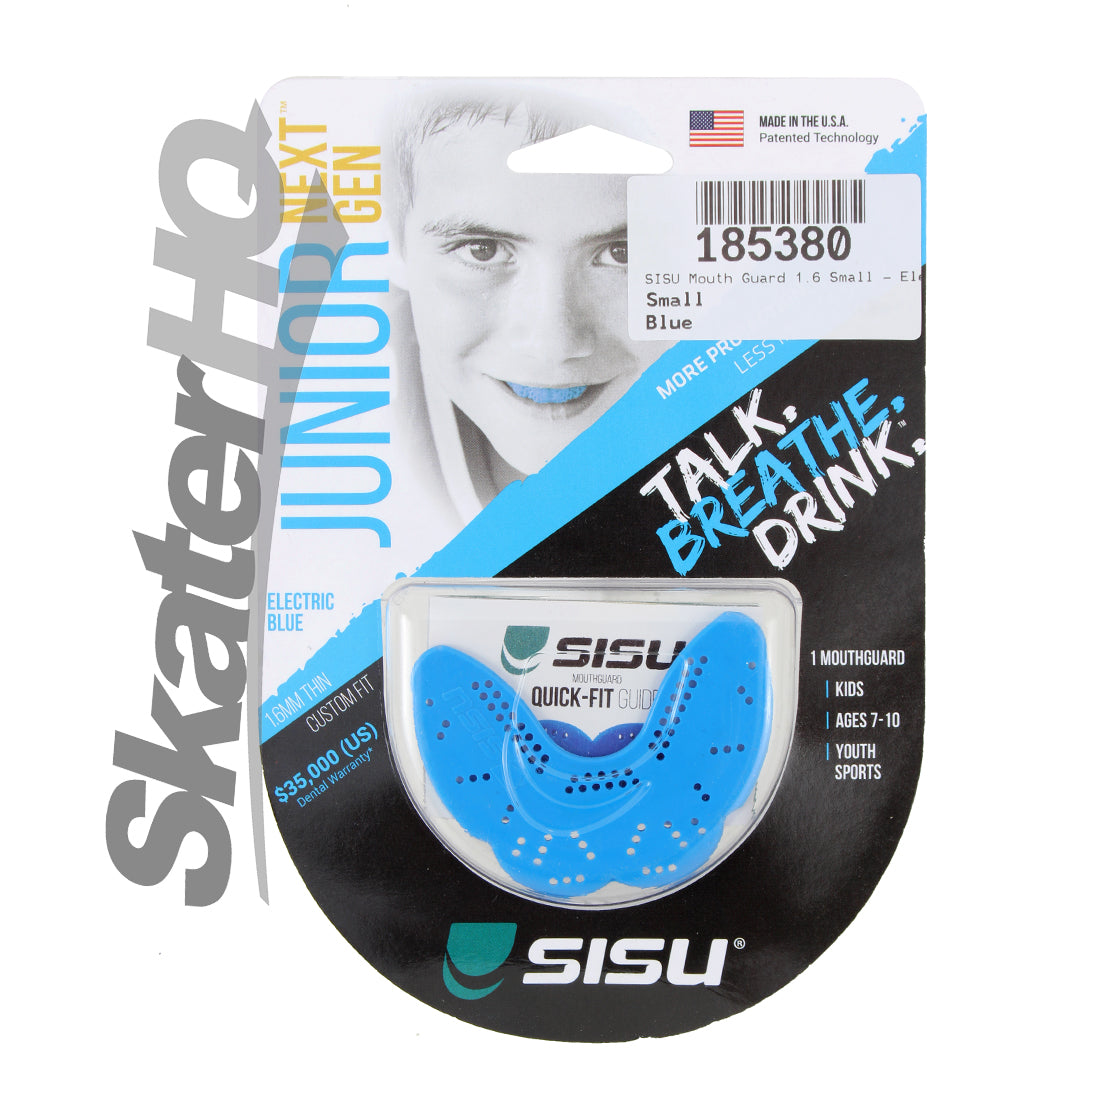 SISU Mouthguard 1.6 Small - Electric Blue Protective Mouthguards